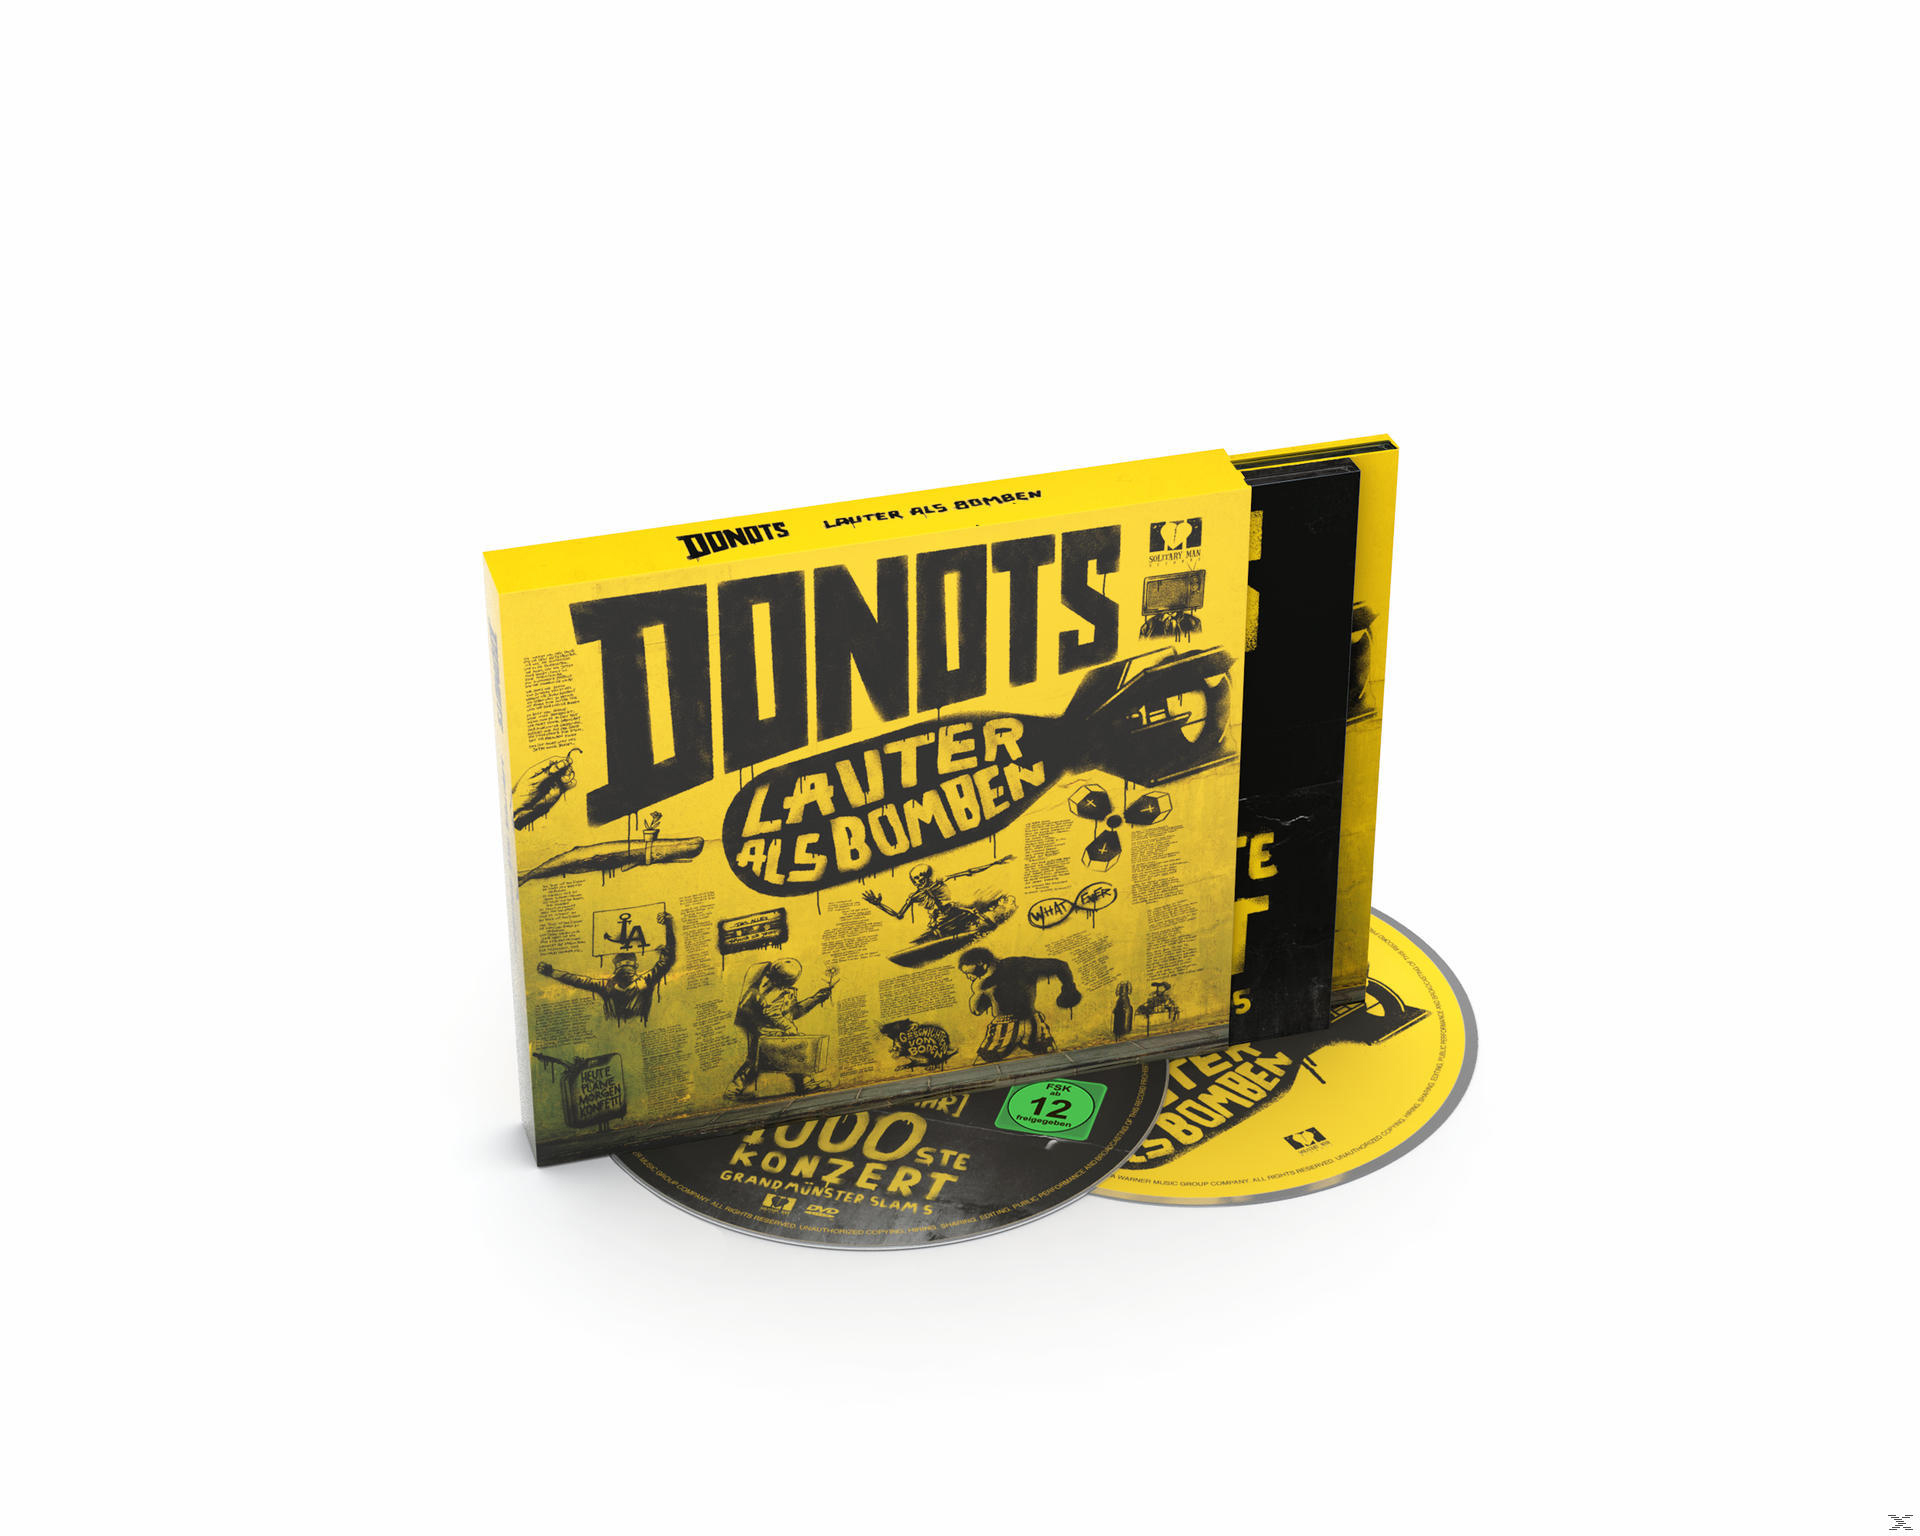 Donots - Lauter als Deluxe (Limitierte Edition - Live DVD Bomben (CD CD im DVD Video) + mit Digipak) 